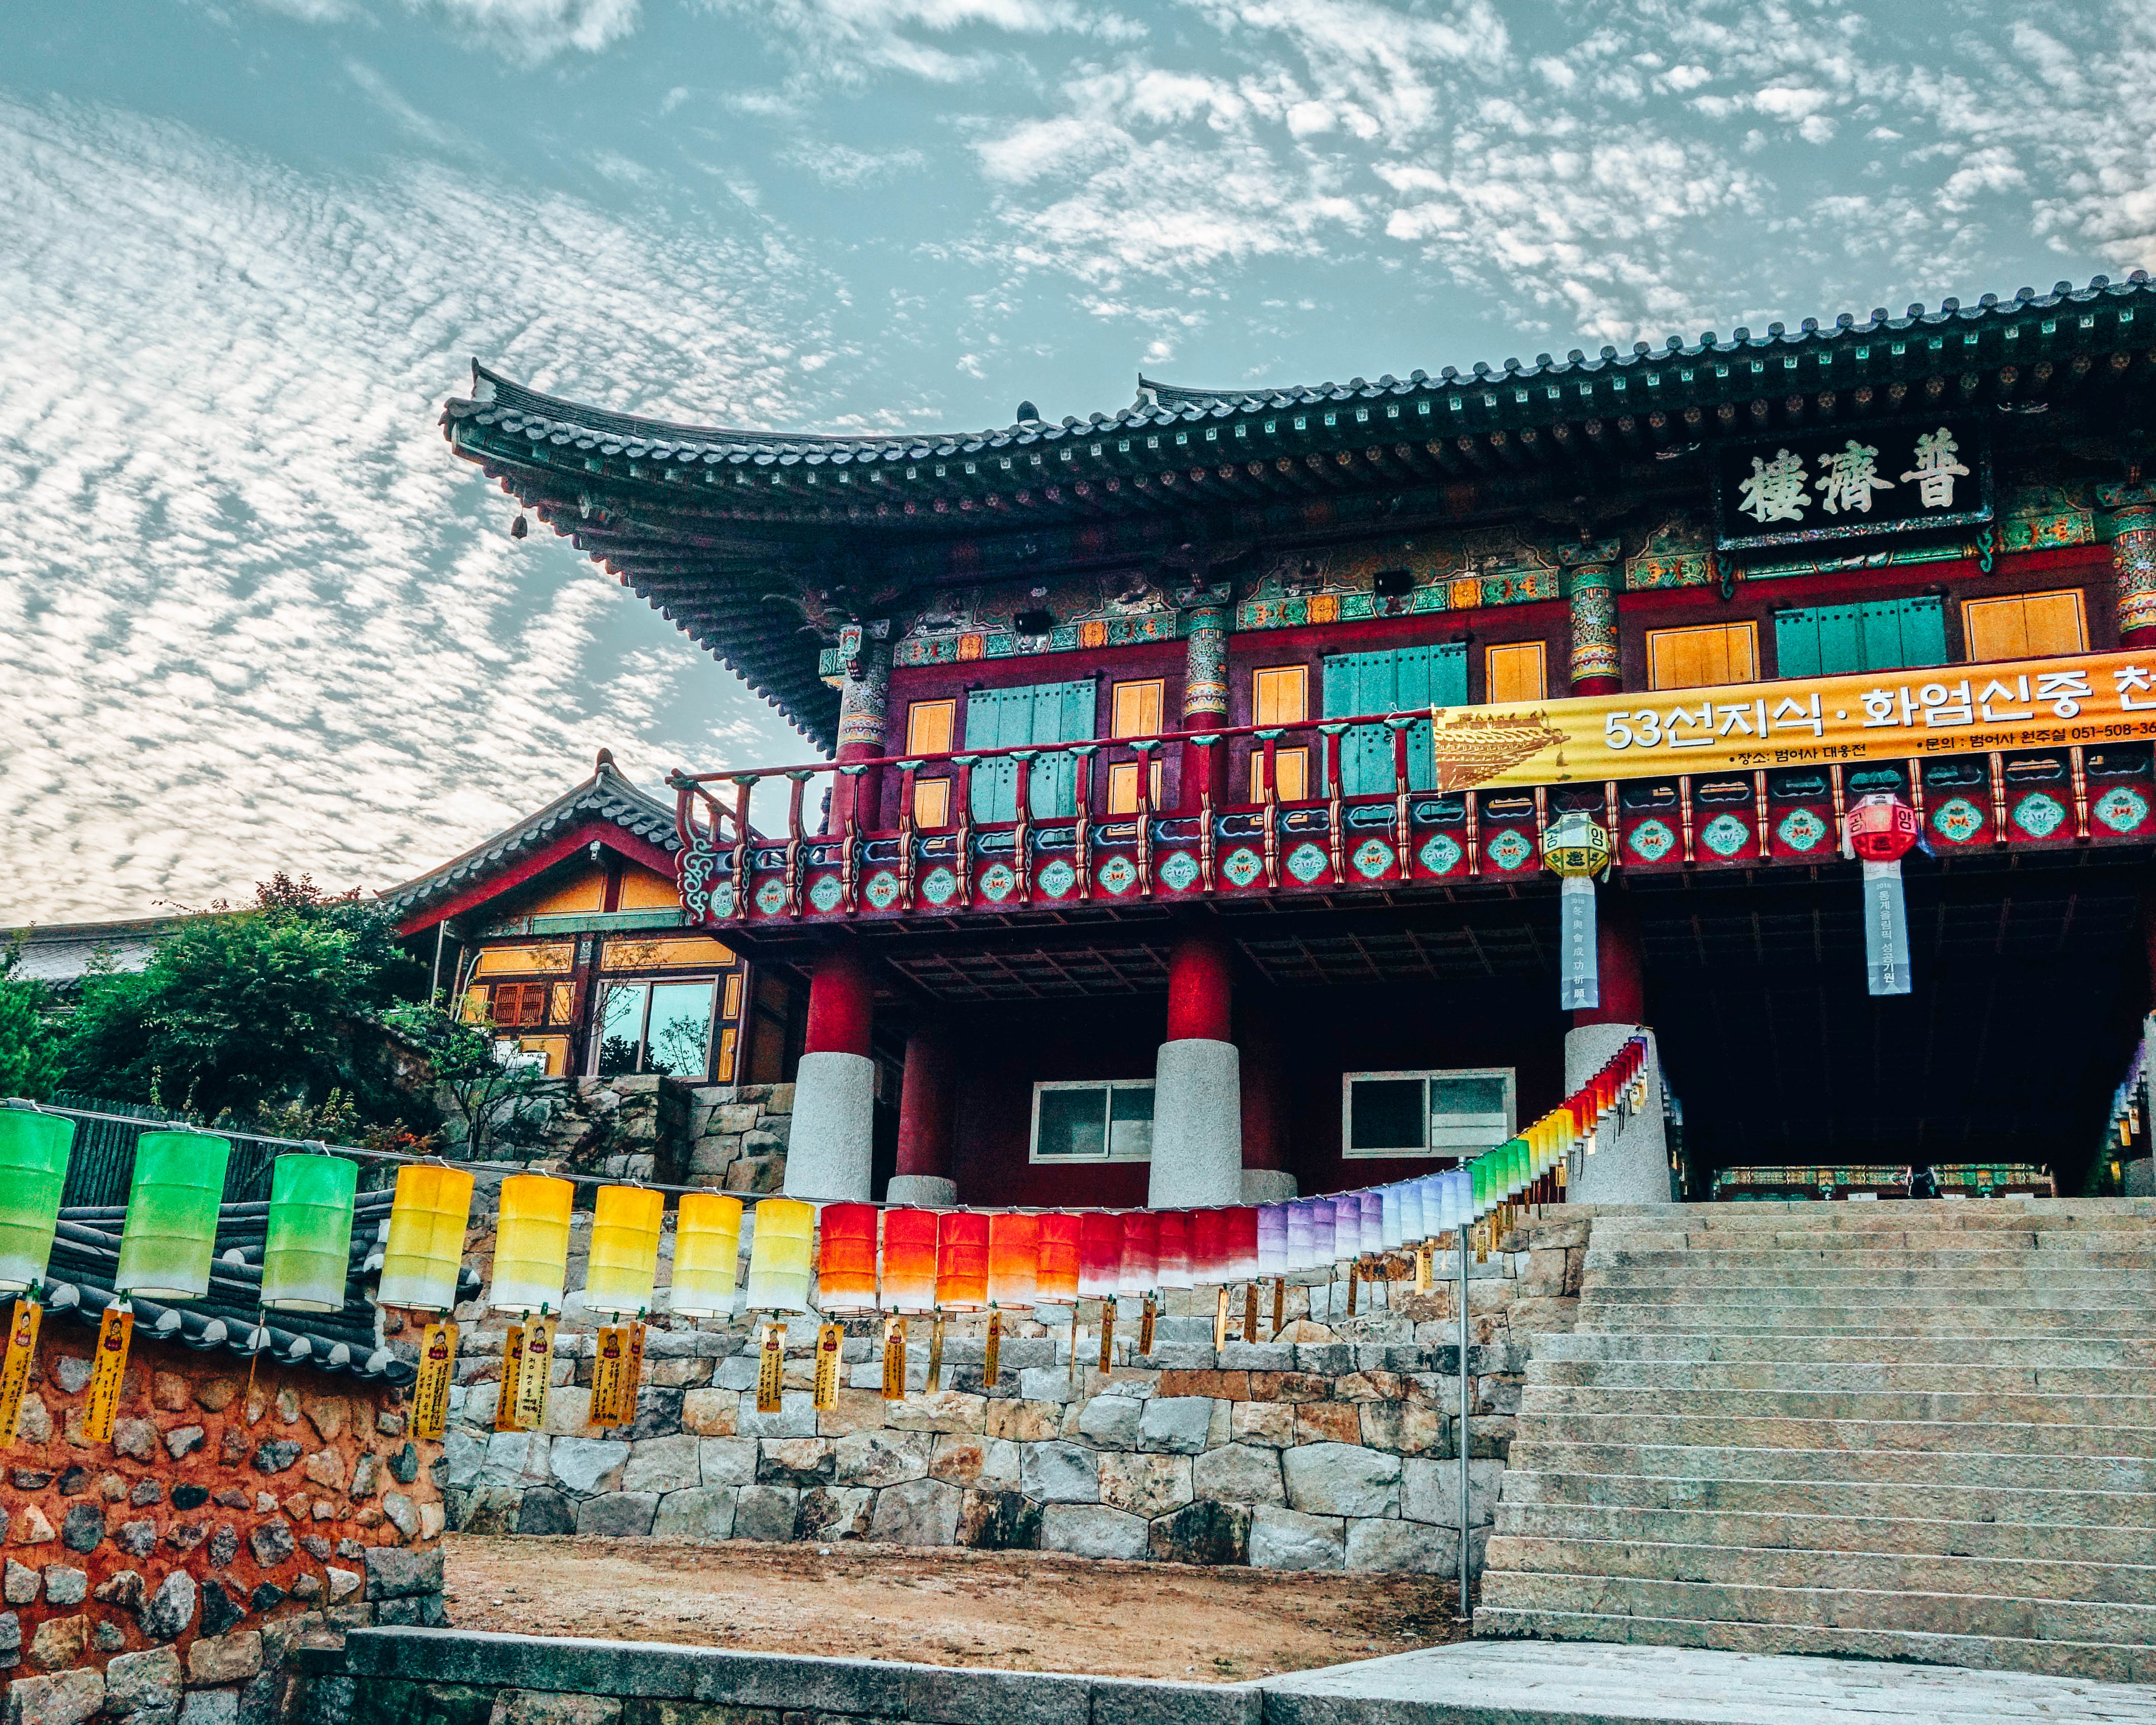 Beomesa temple in Busan, South Korea - Top tips for hiking up Mount Geumjeongsan - WeDidItOurWay.com